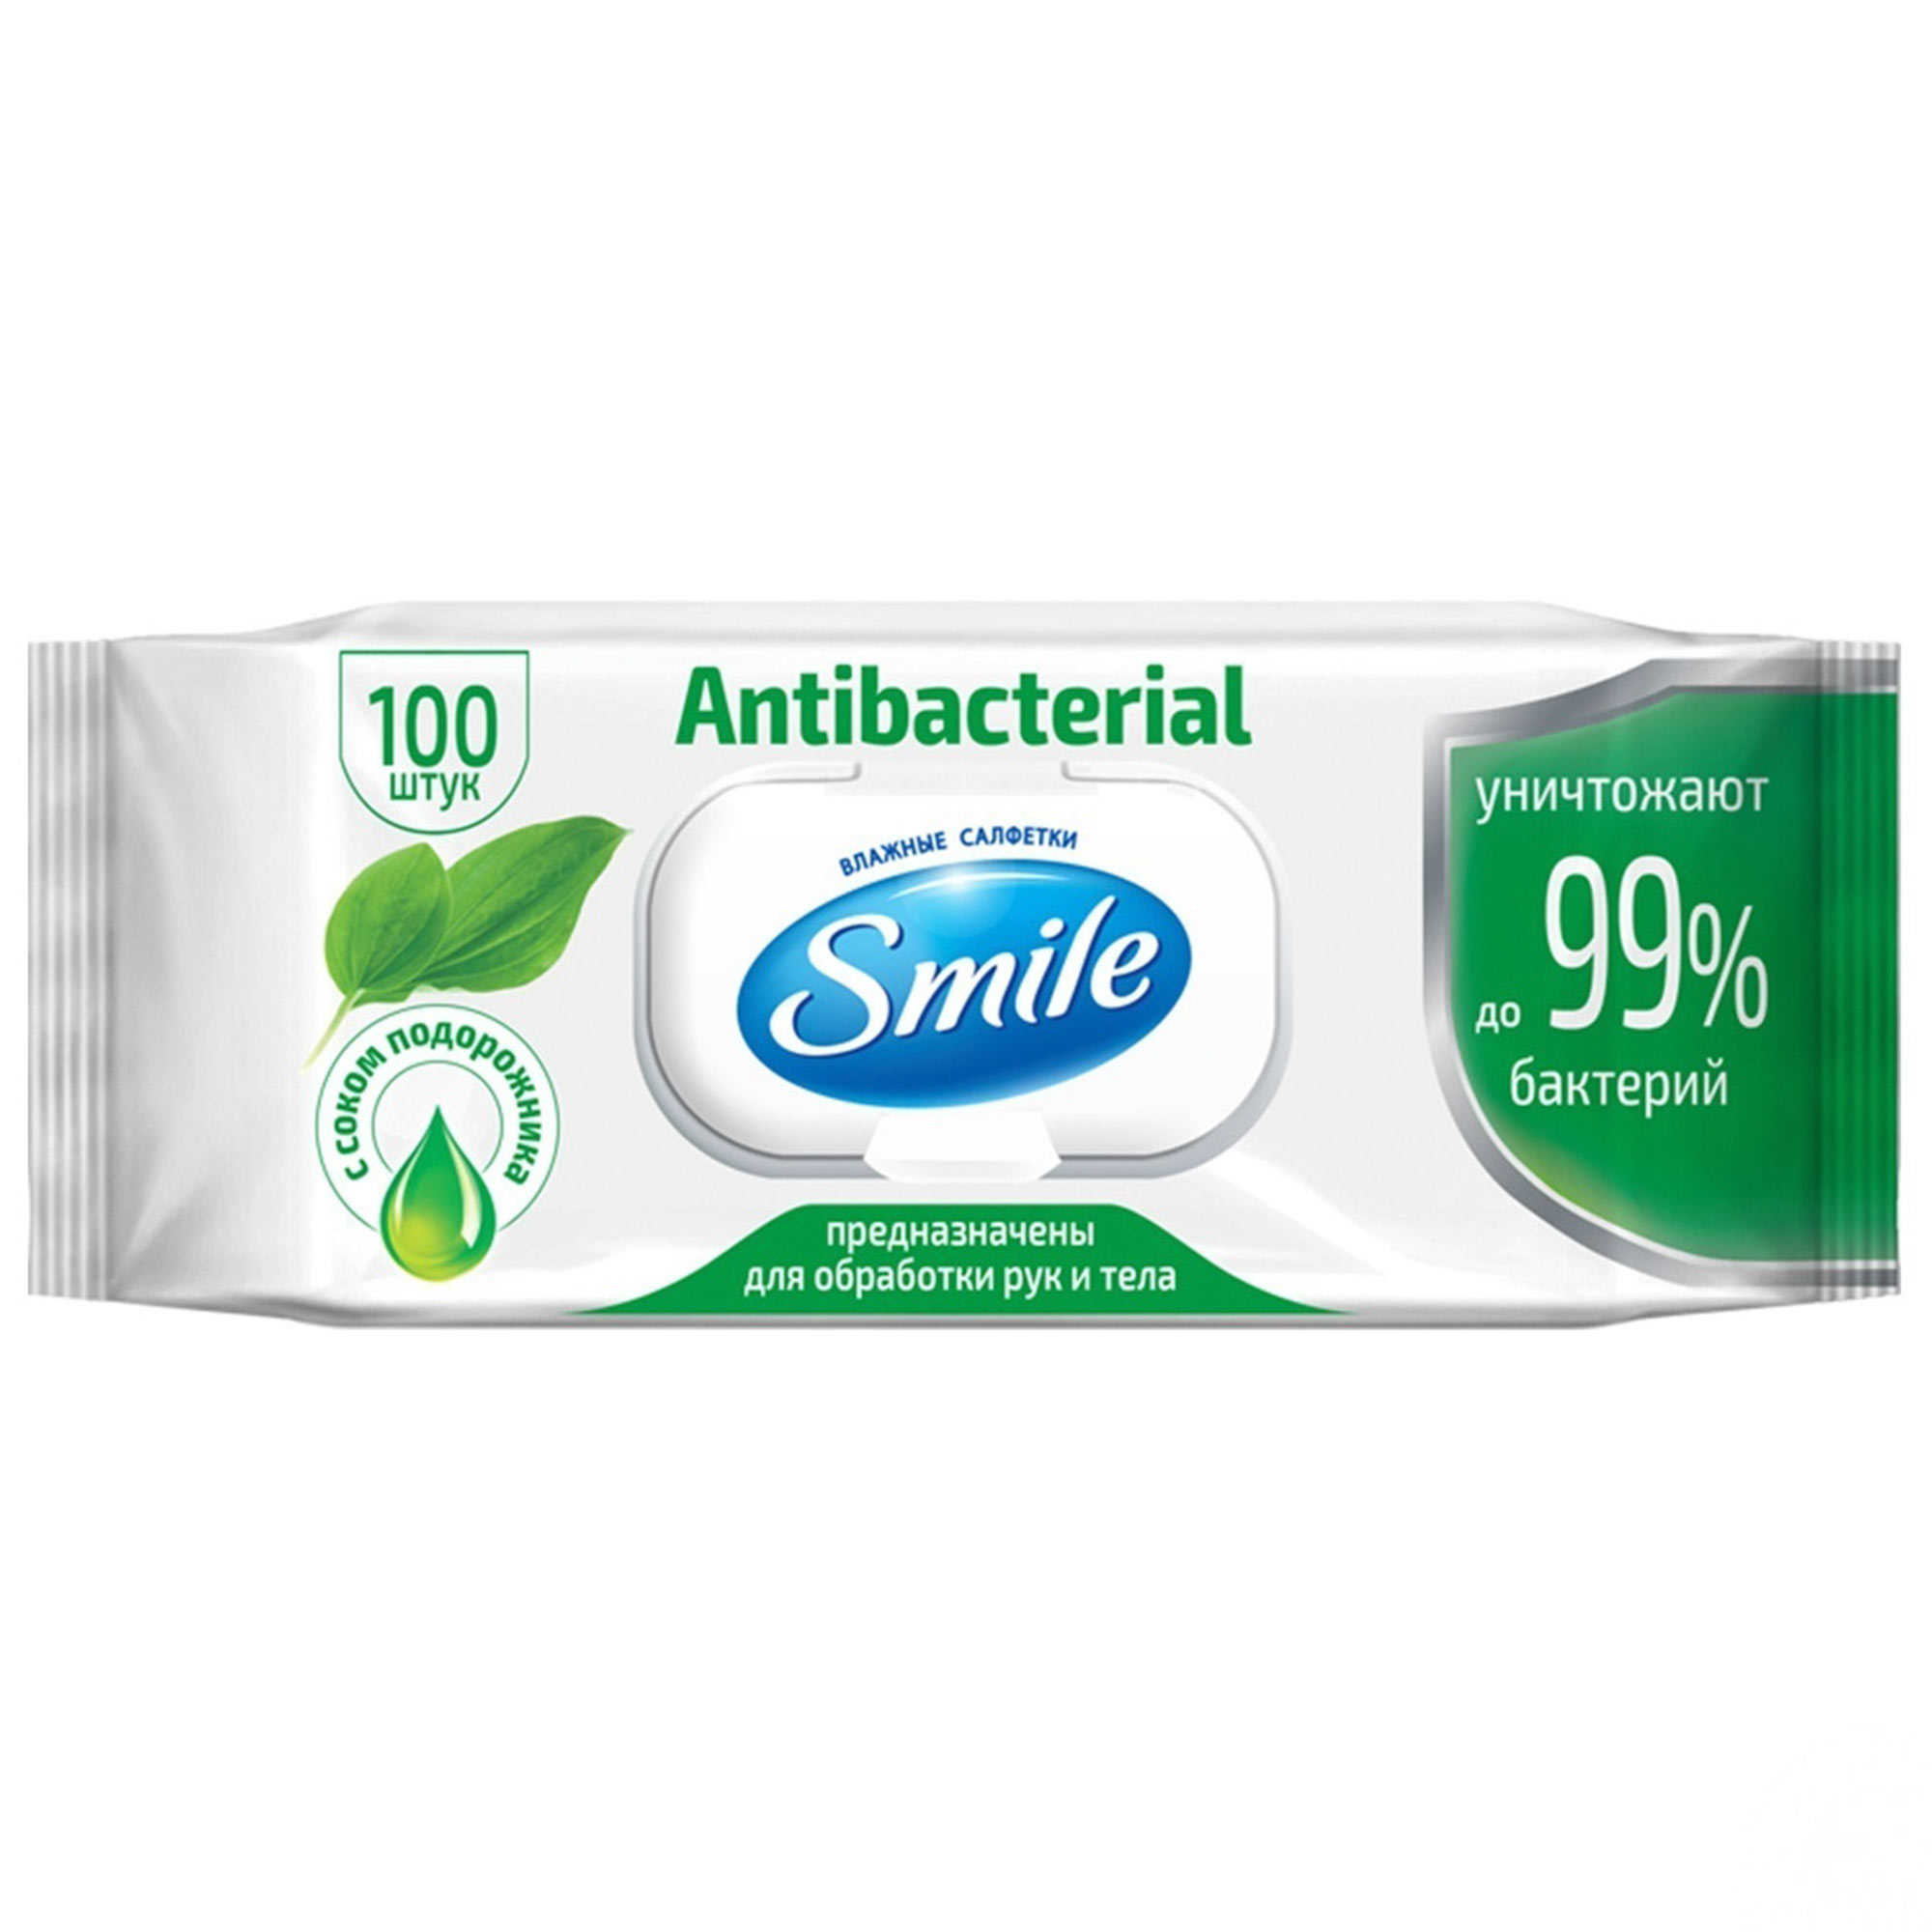 Салфетки влажные Smile Antibacterial с соком подорожника 100 шт салфетки влажные антибактериальные salfeti с клапаном 72 шт